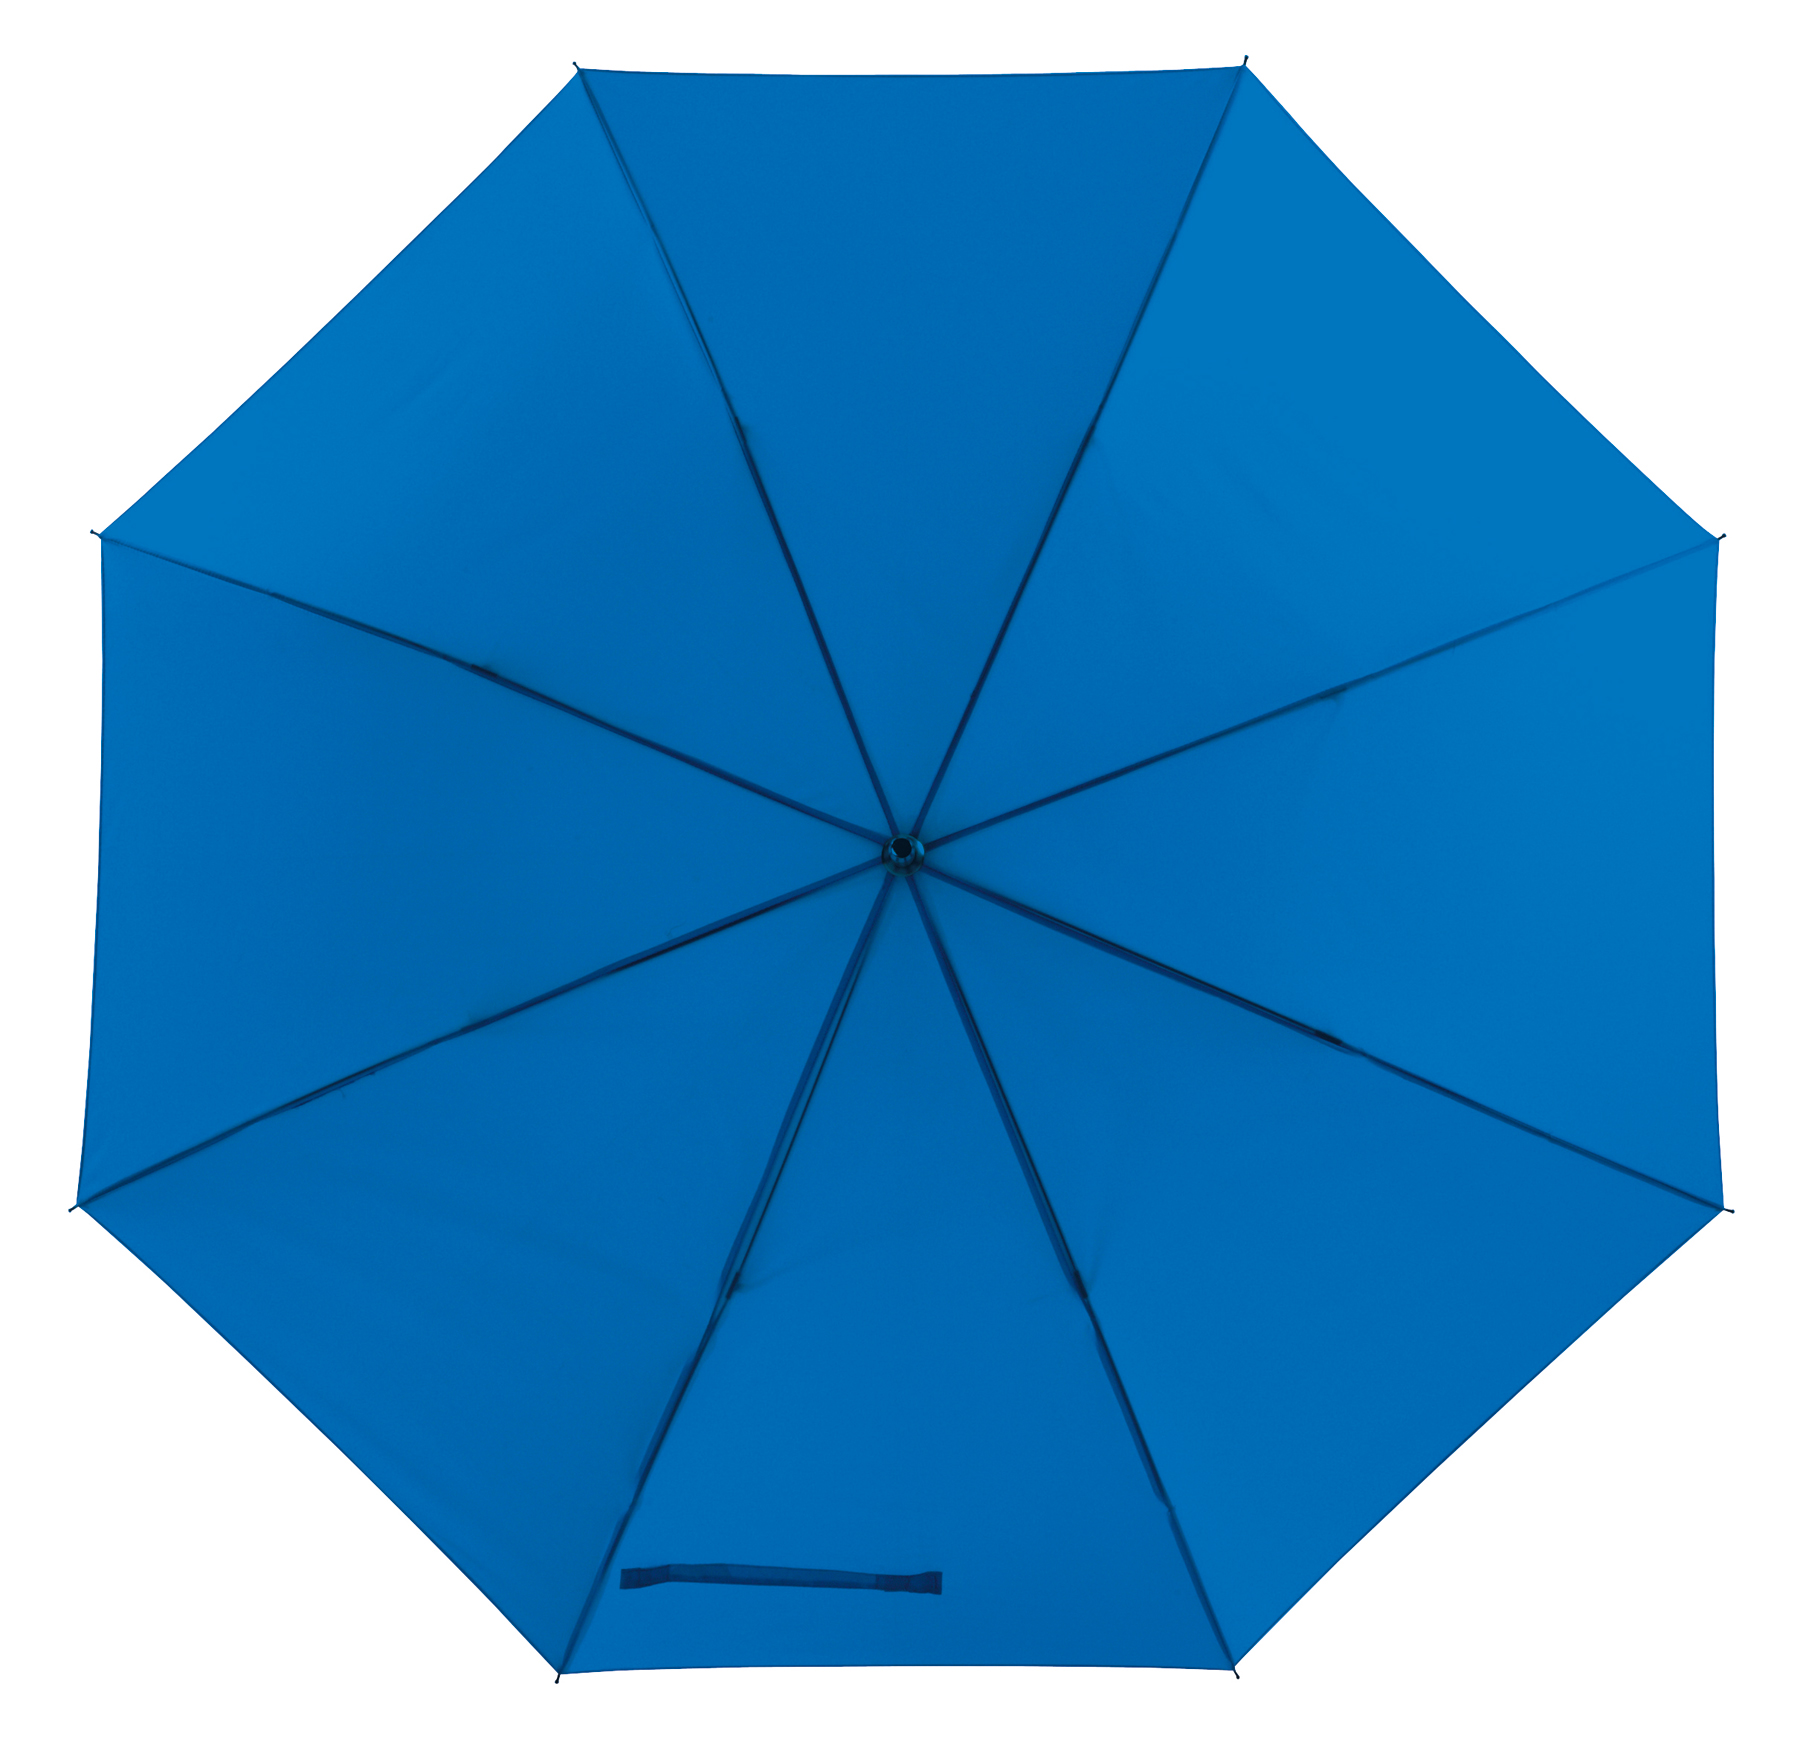 Parasol golf MOBILE, niebieski